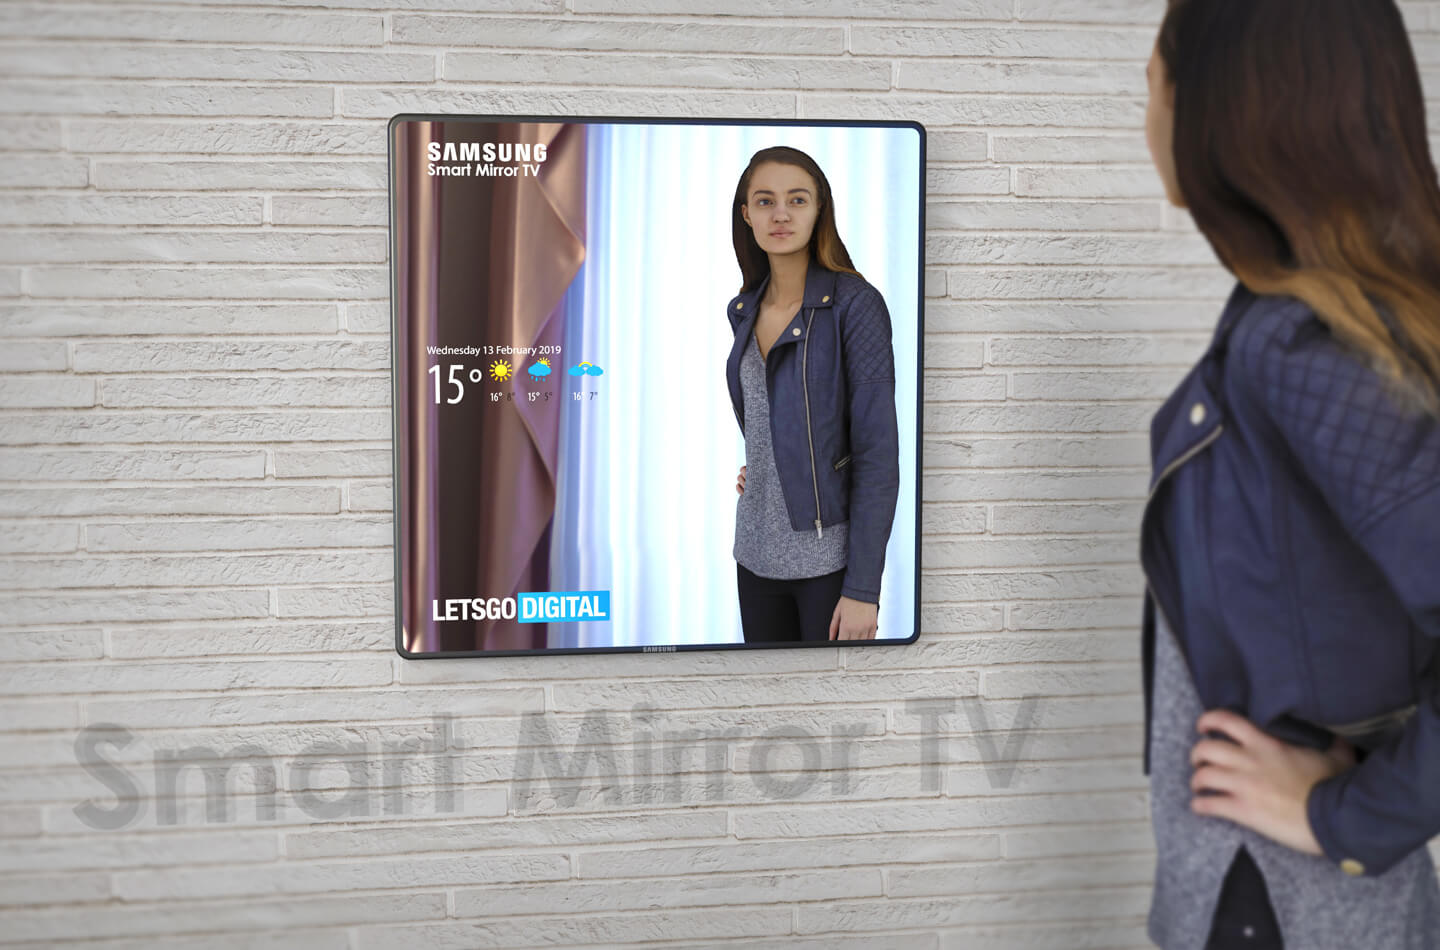 mirror for samsung tv mac